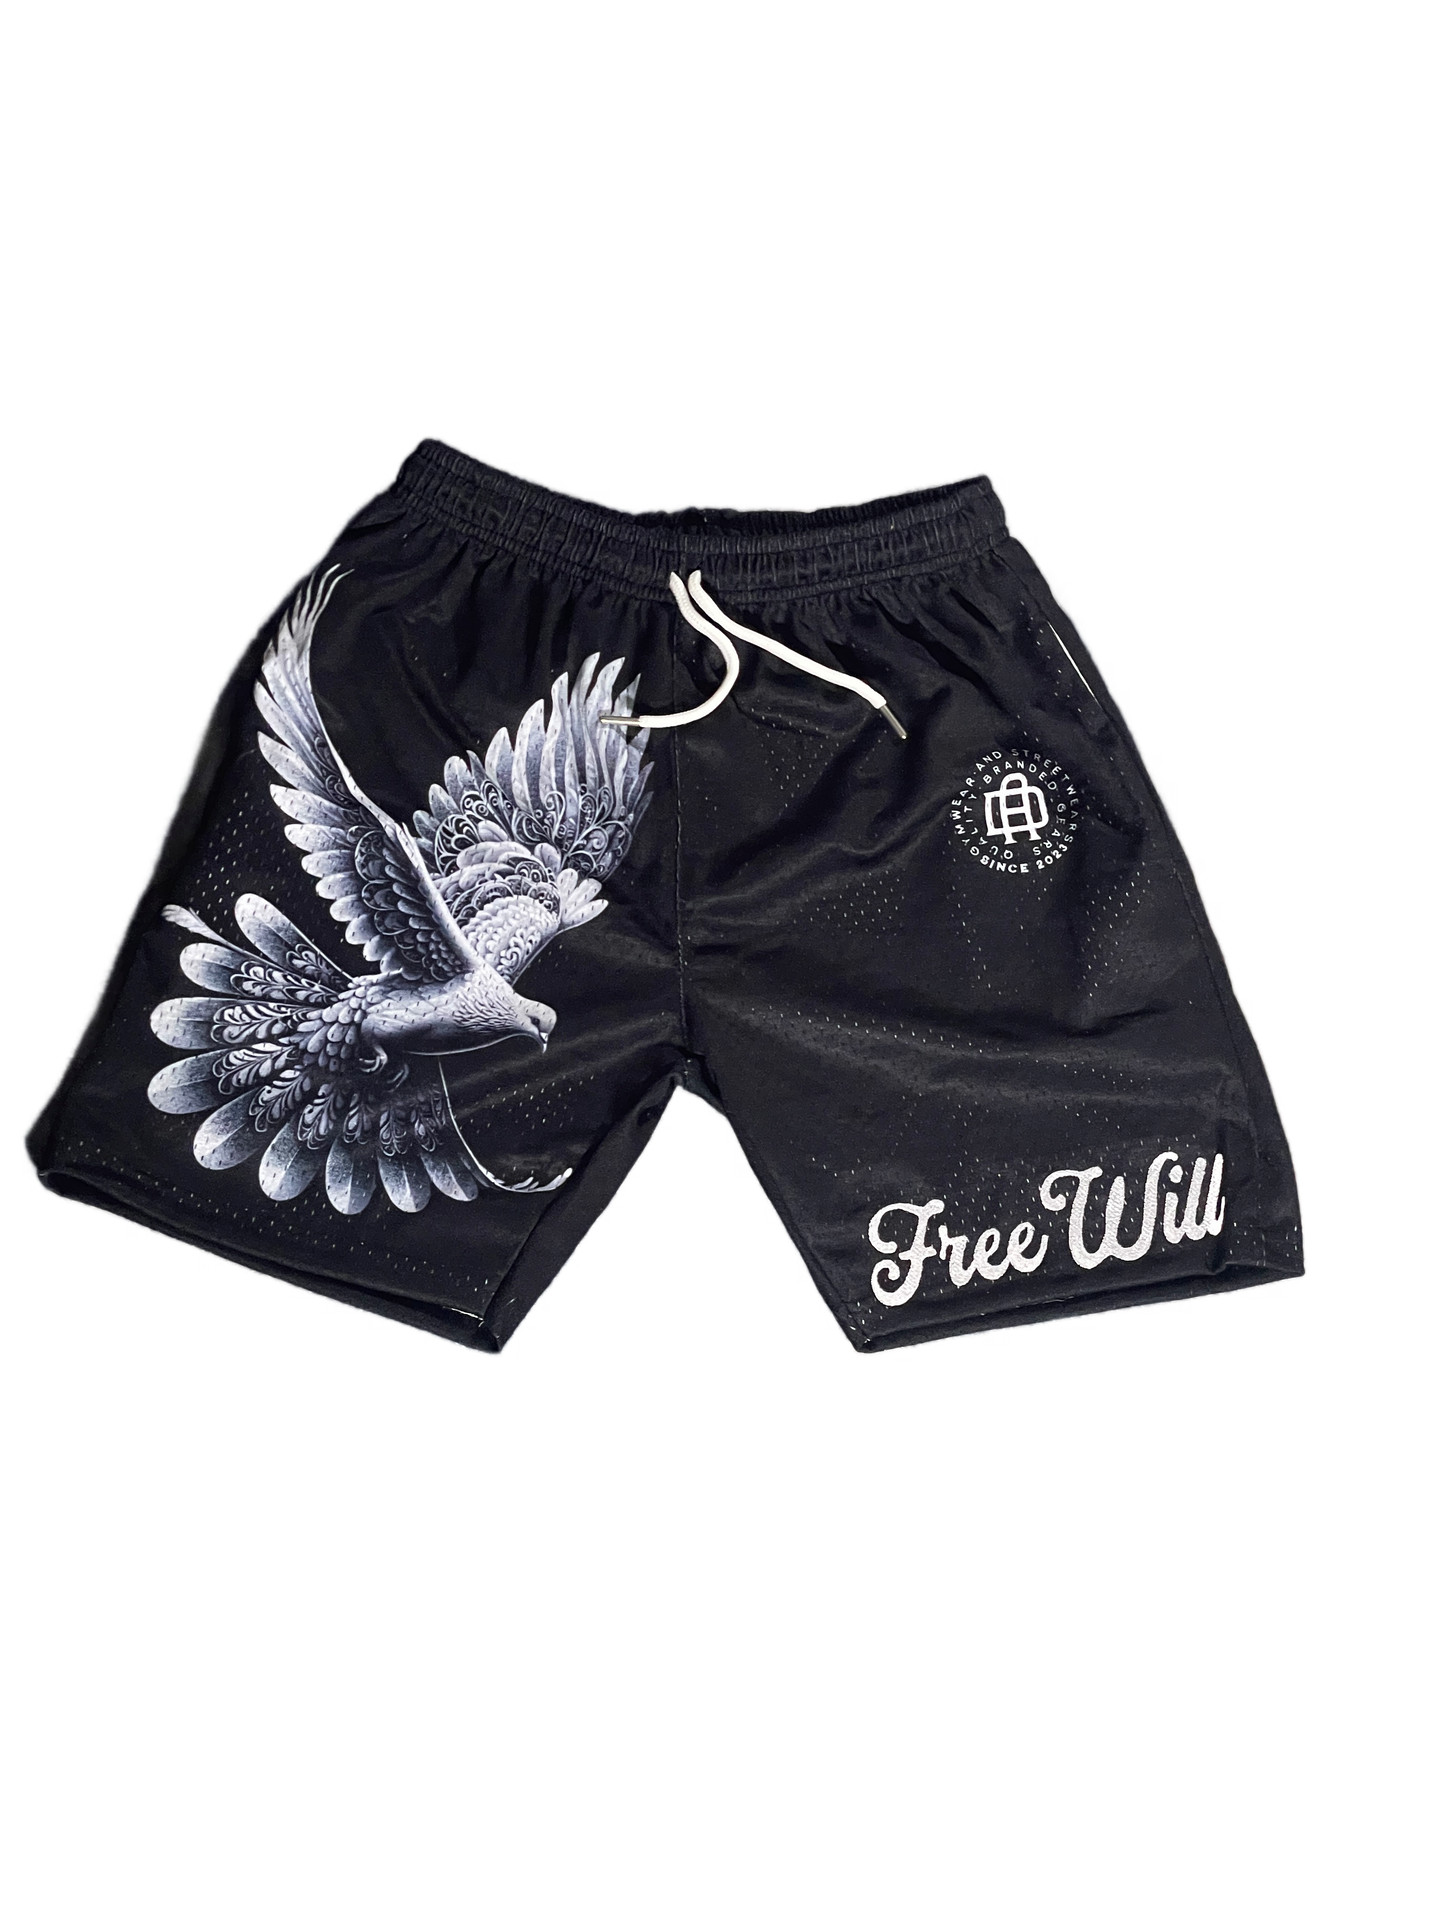 FREE WILL" black shorts"